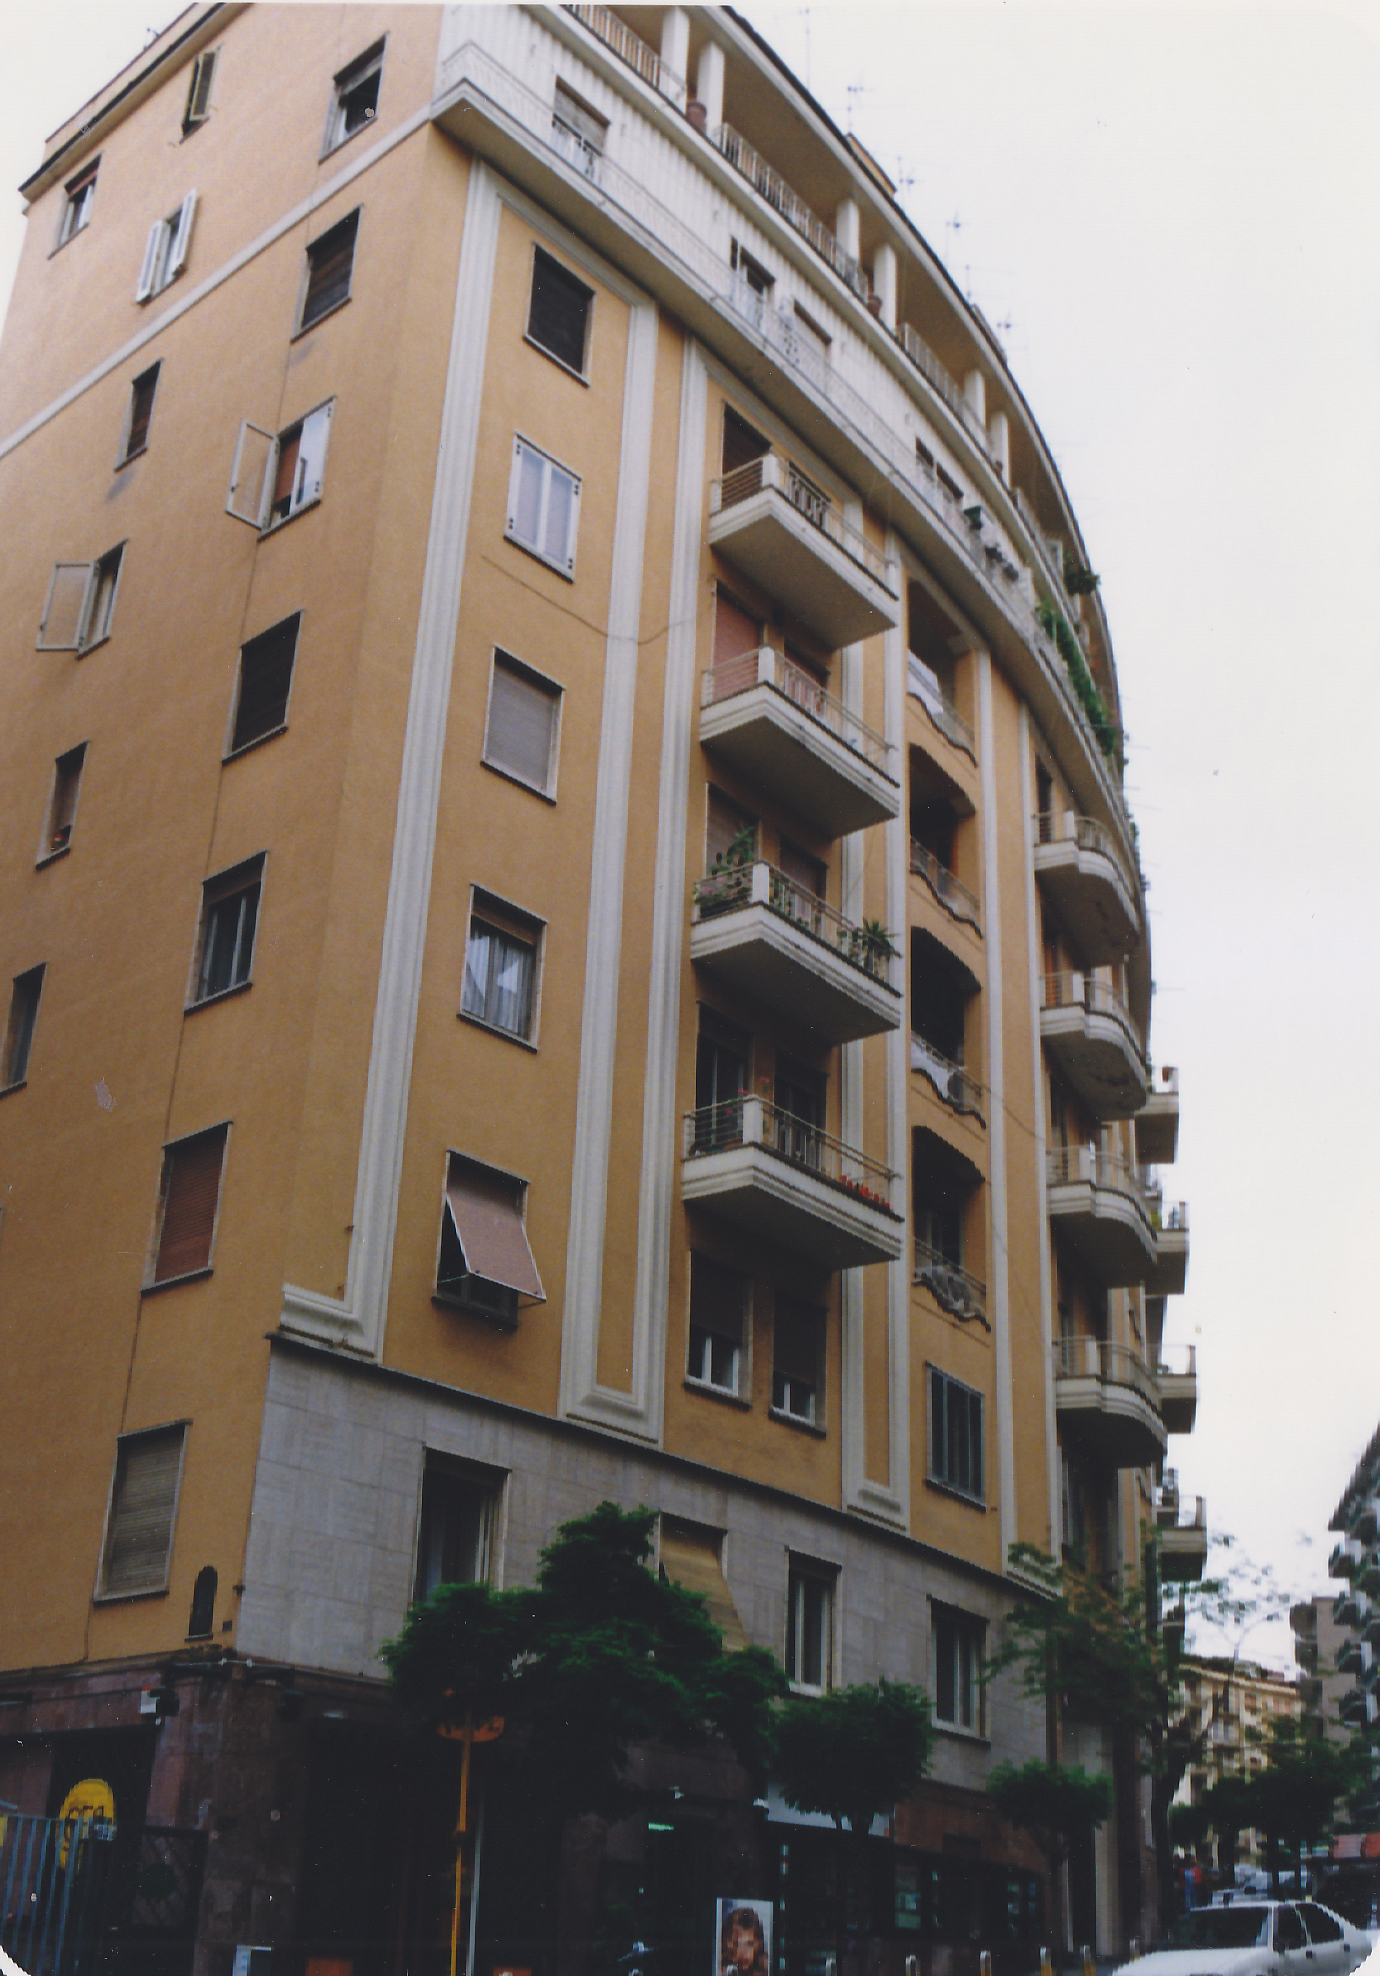 ignota - v.le Michelngelo, 80 (palazzo, residenziale) - Napoli (NA) 